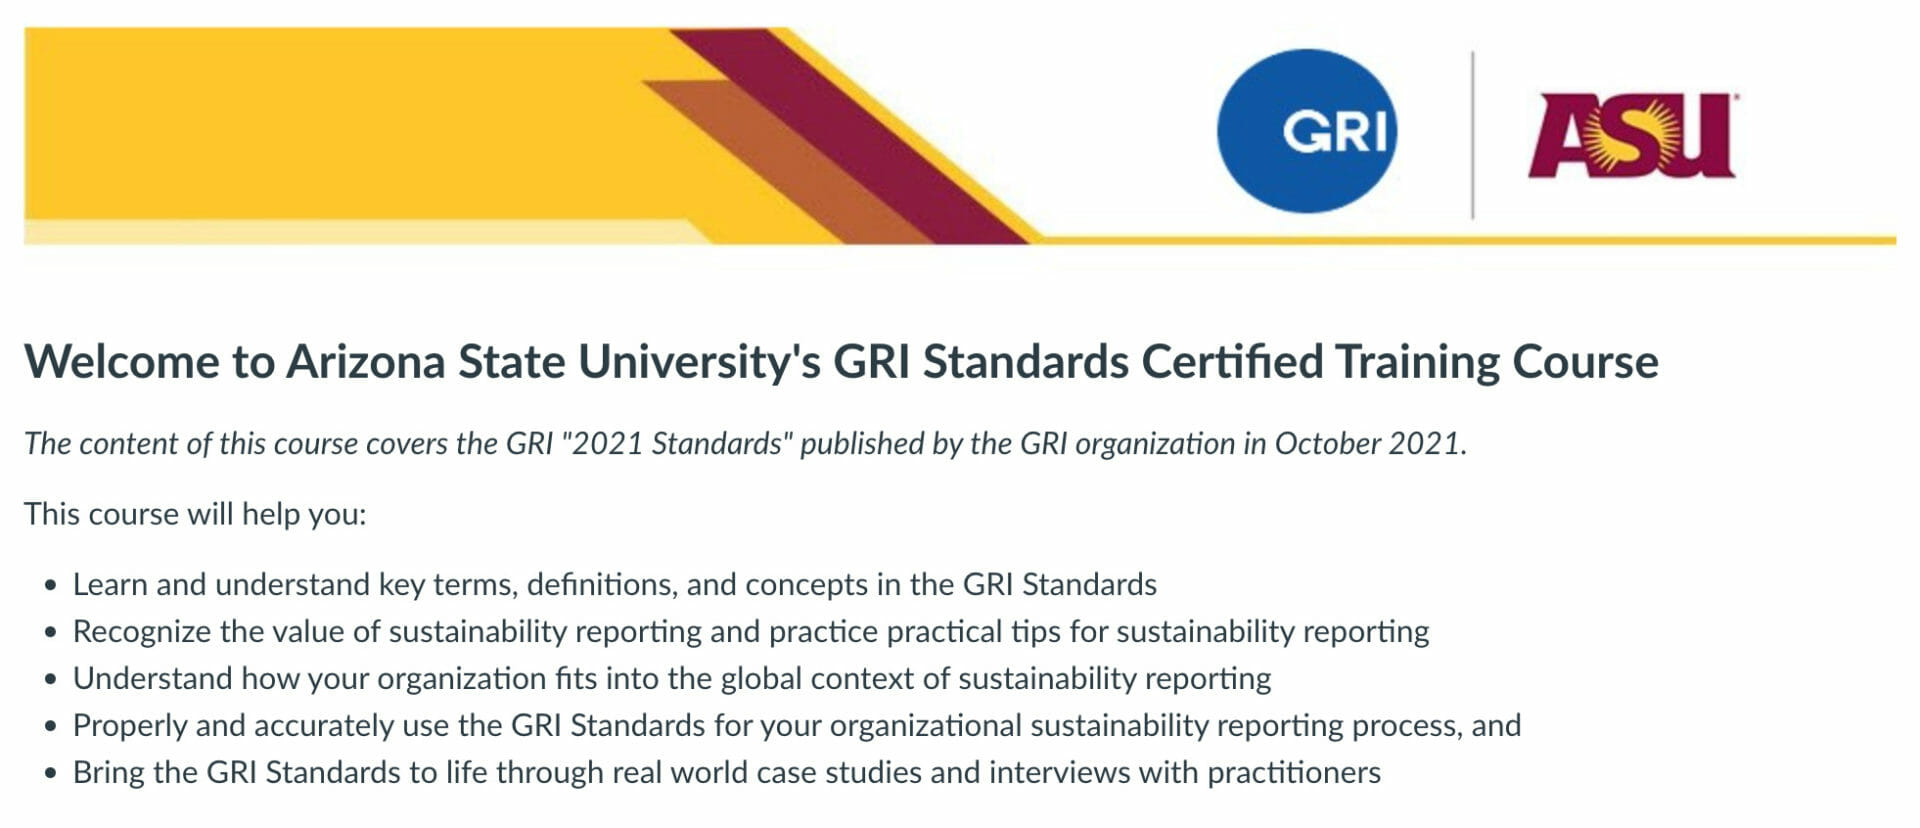 GRI Standards Training Course